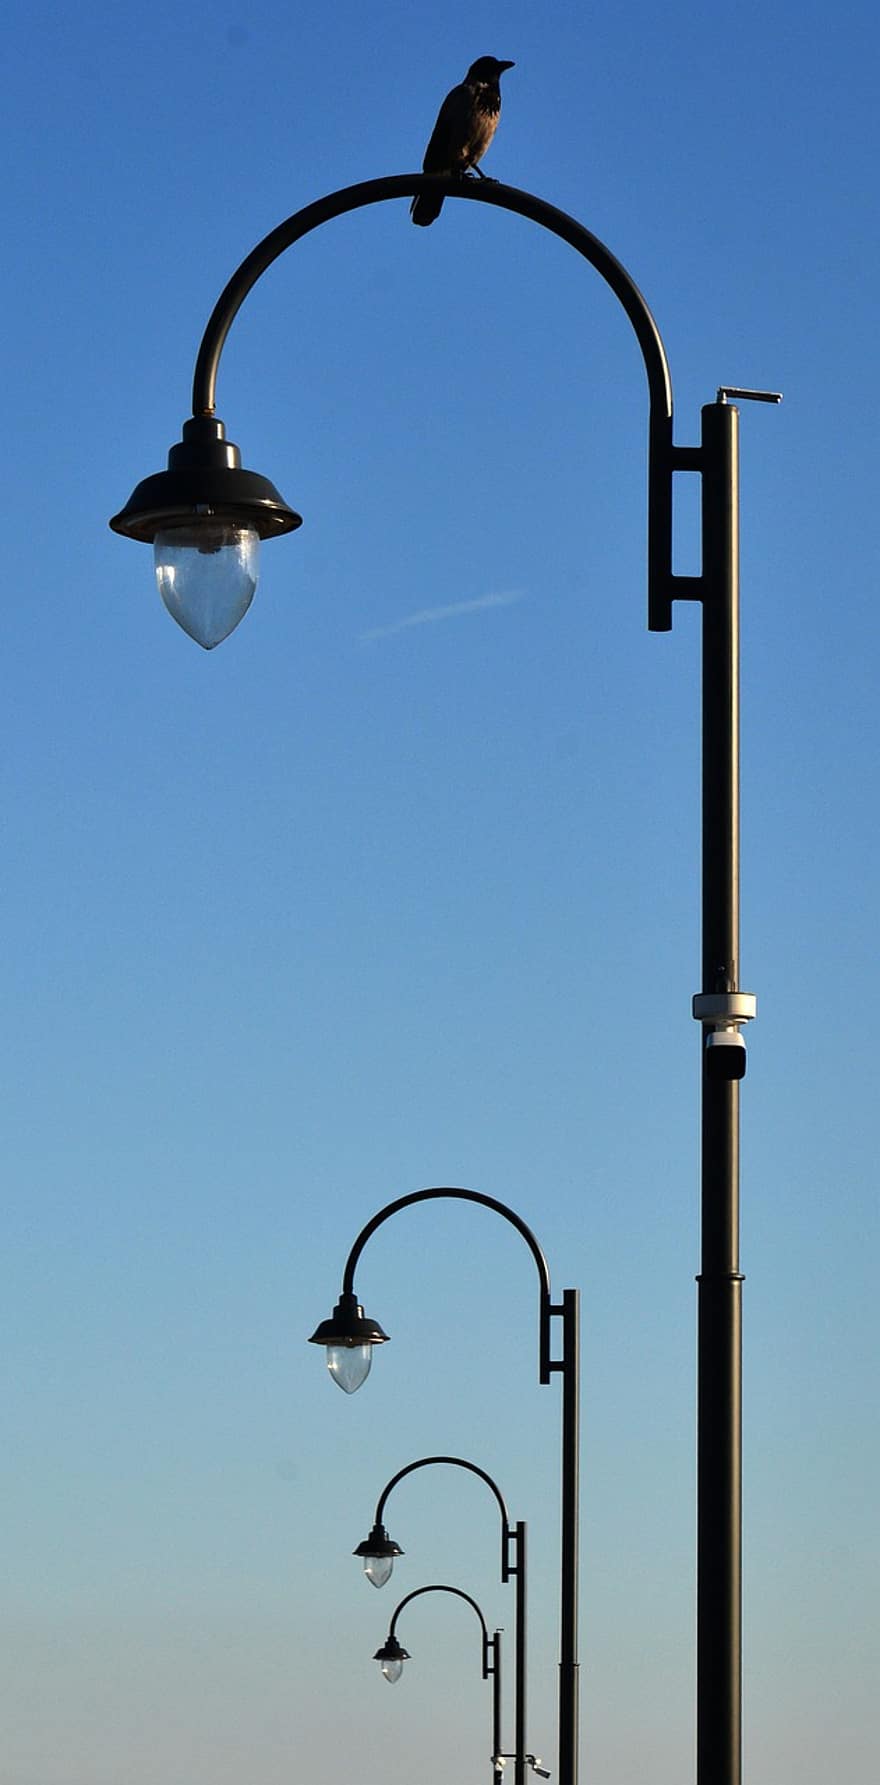 Crow, Sky, Lamppost, Bird, lantern, electric lamp, blue, street light, silhouette, seagull, pole